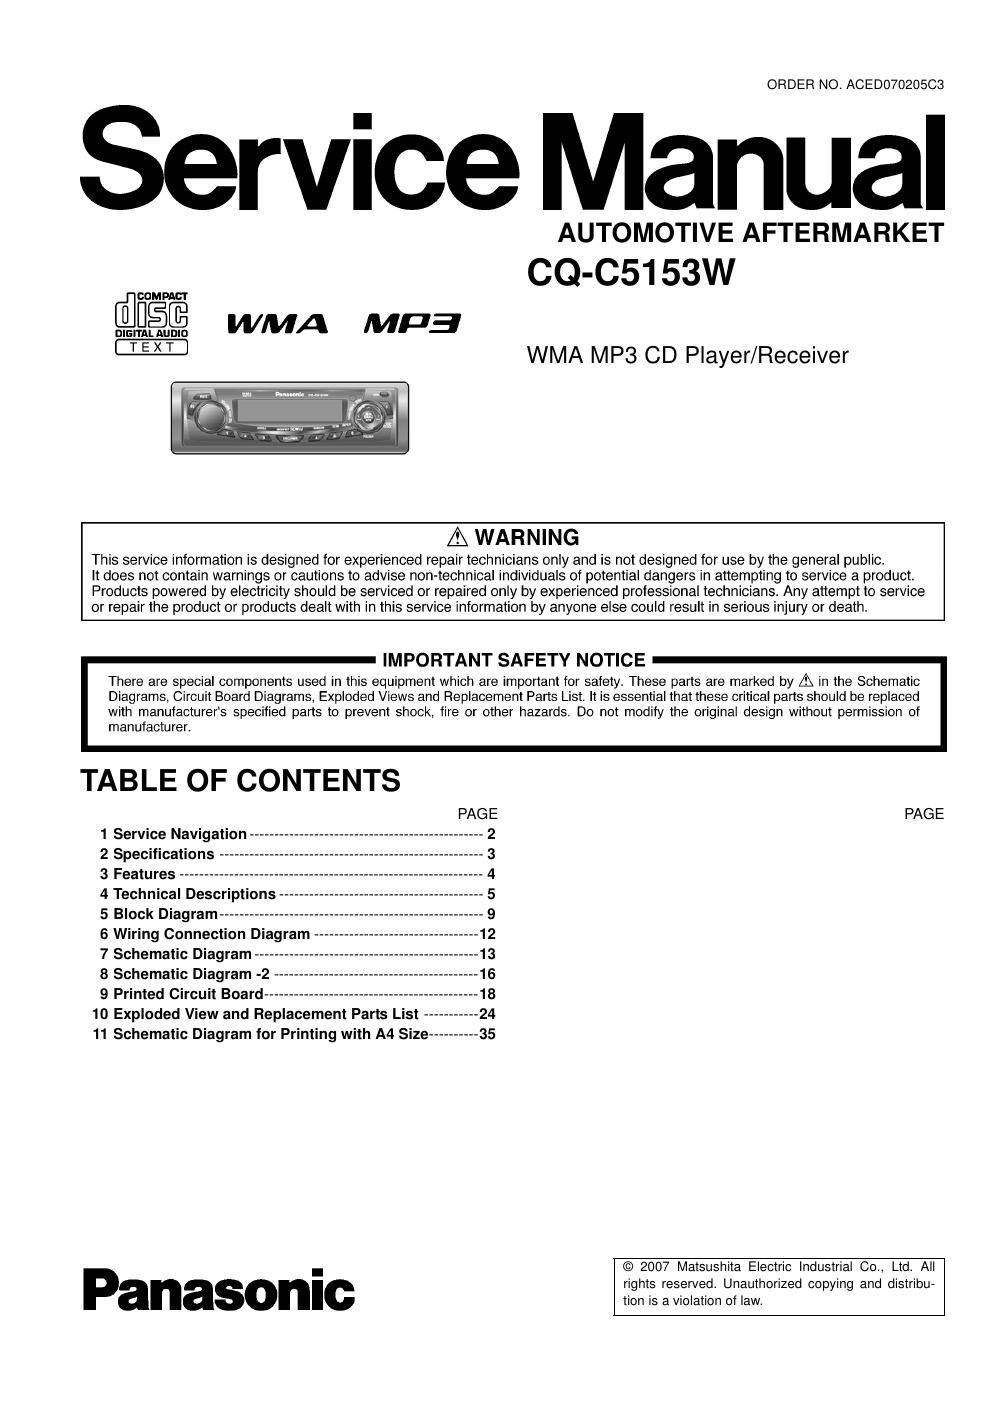 panasonic cq c 5153 w service manual